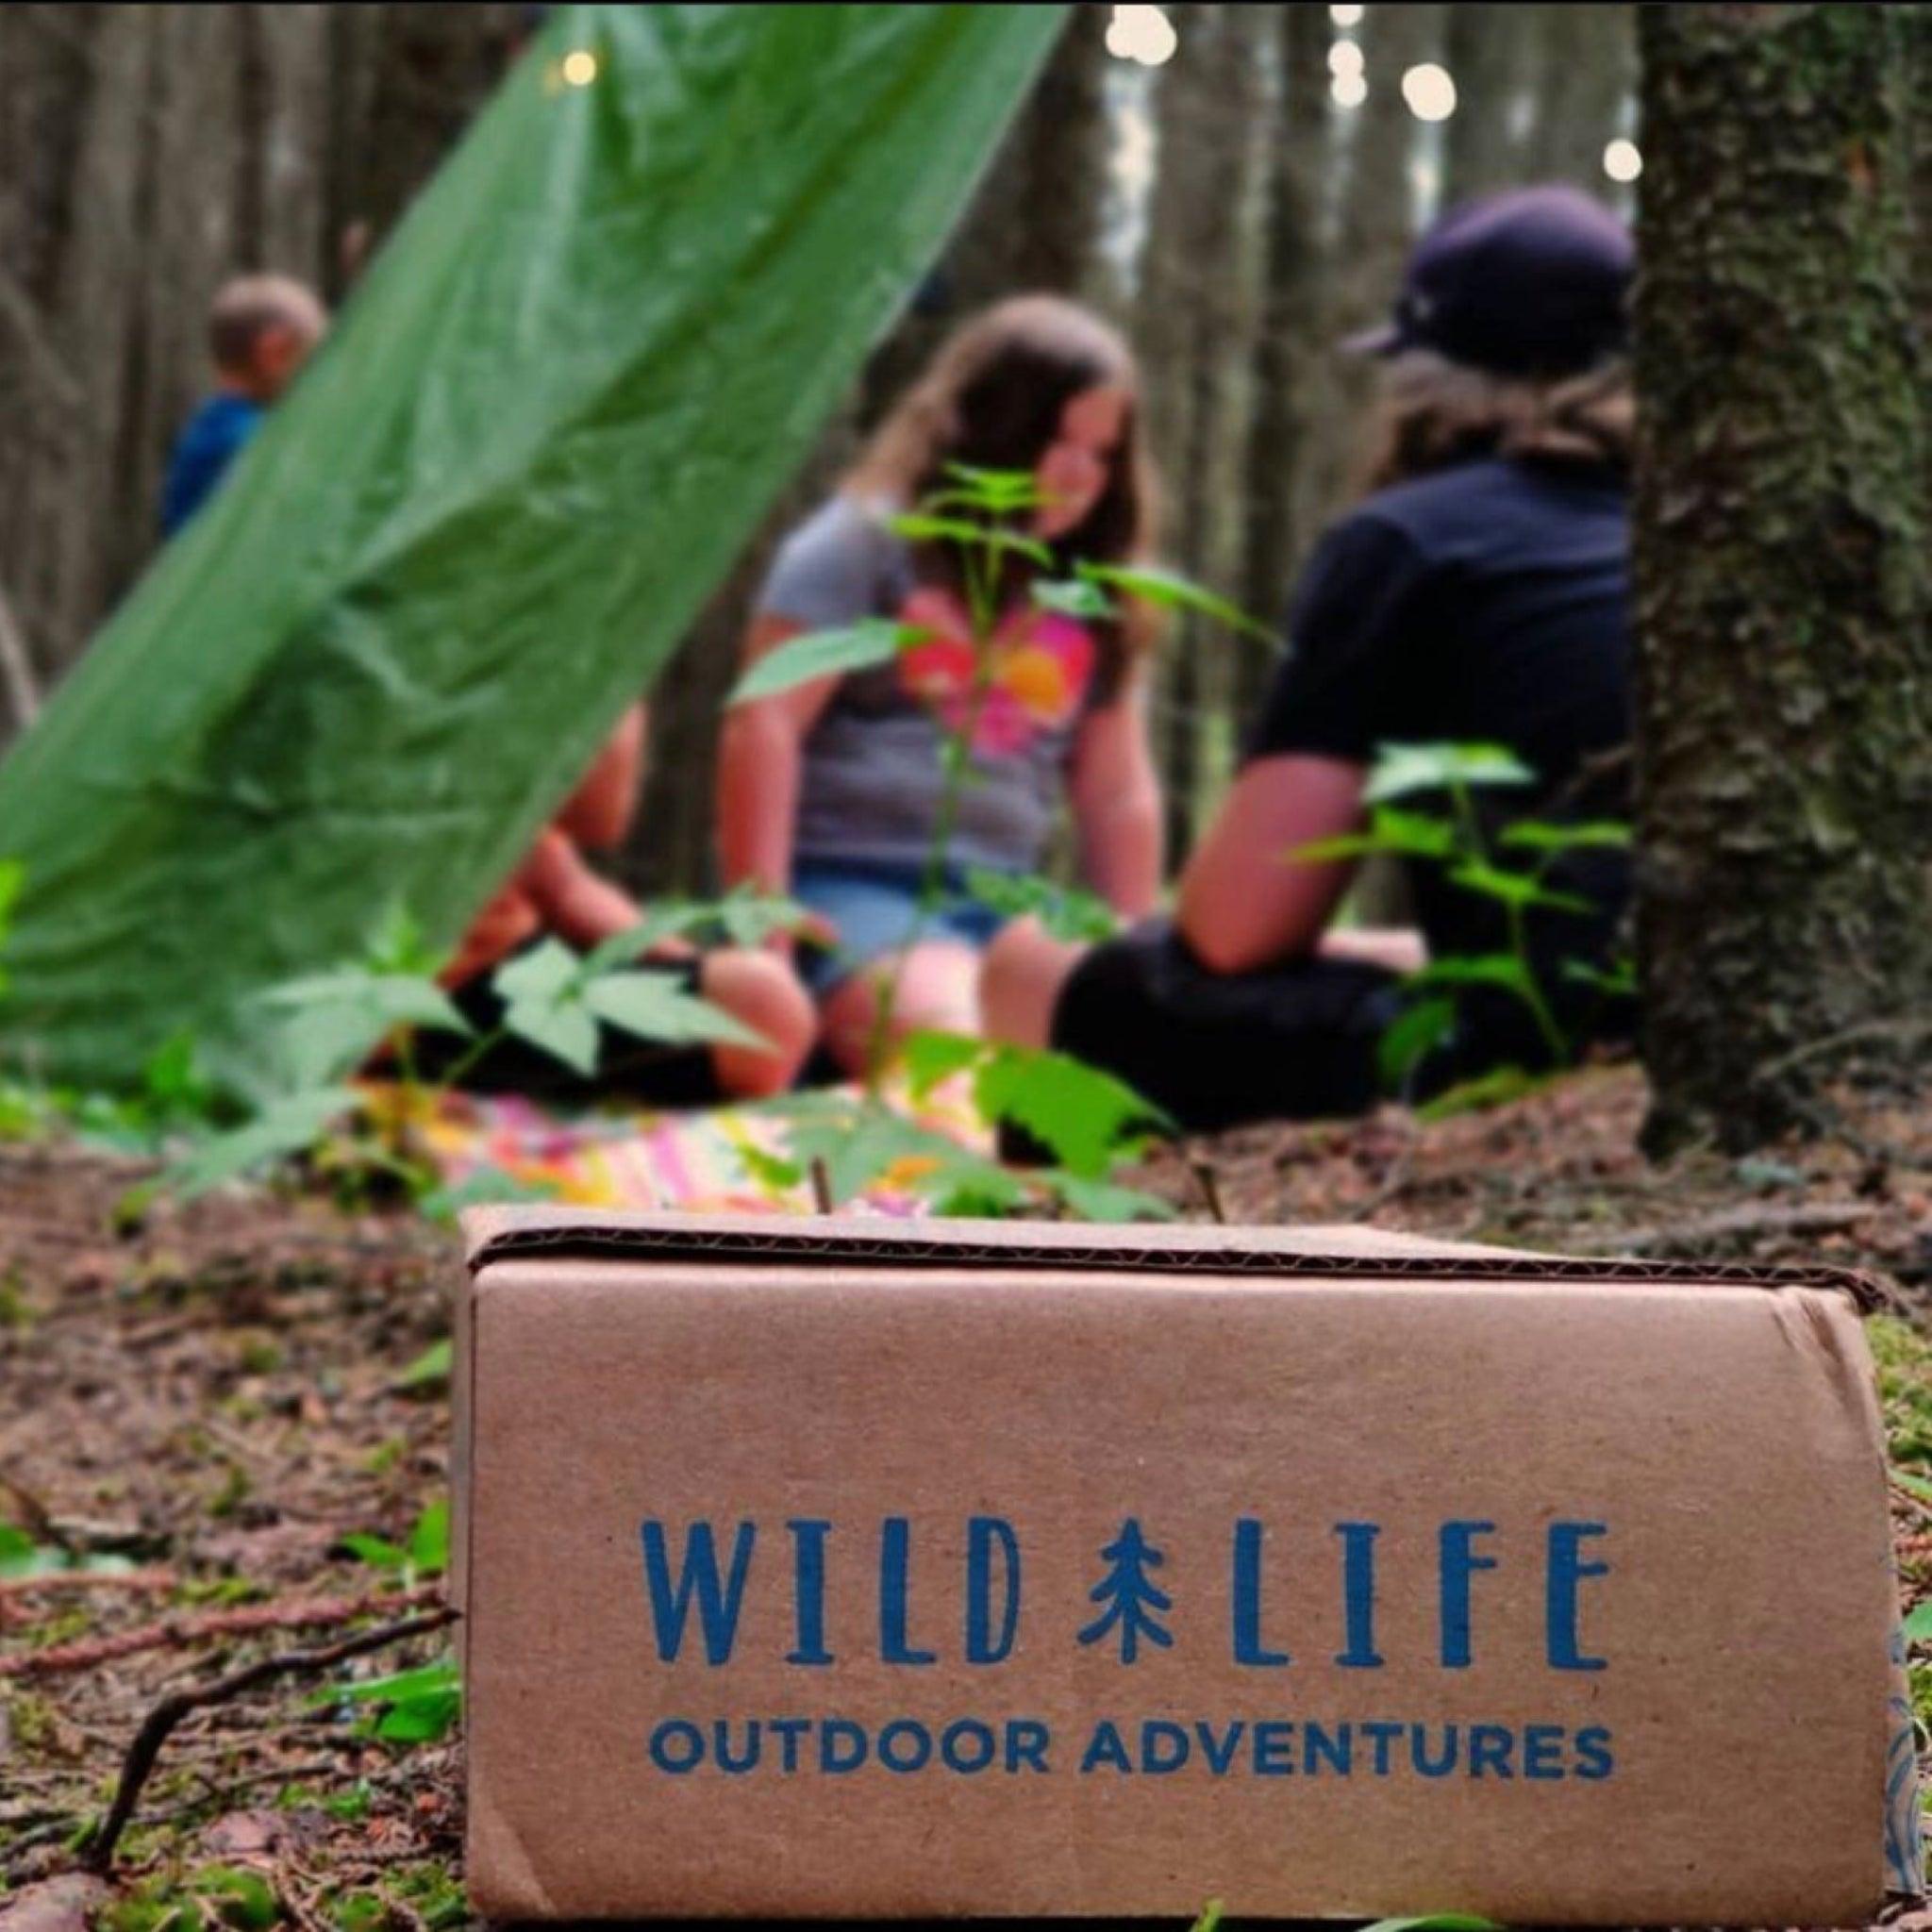 Take Cover Outdoor Adventure Kit - Wild | Life Outdoor Adventures